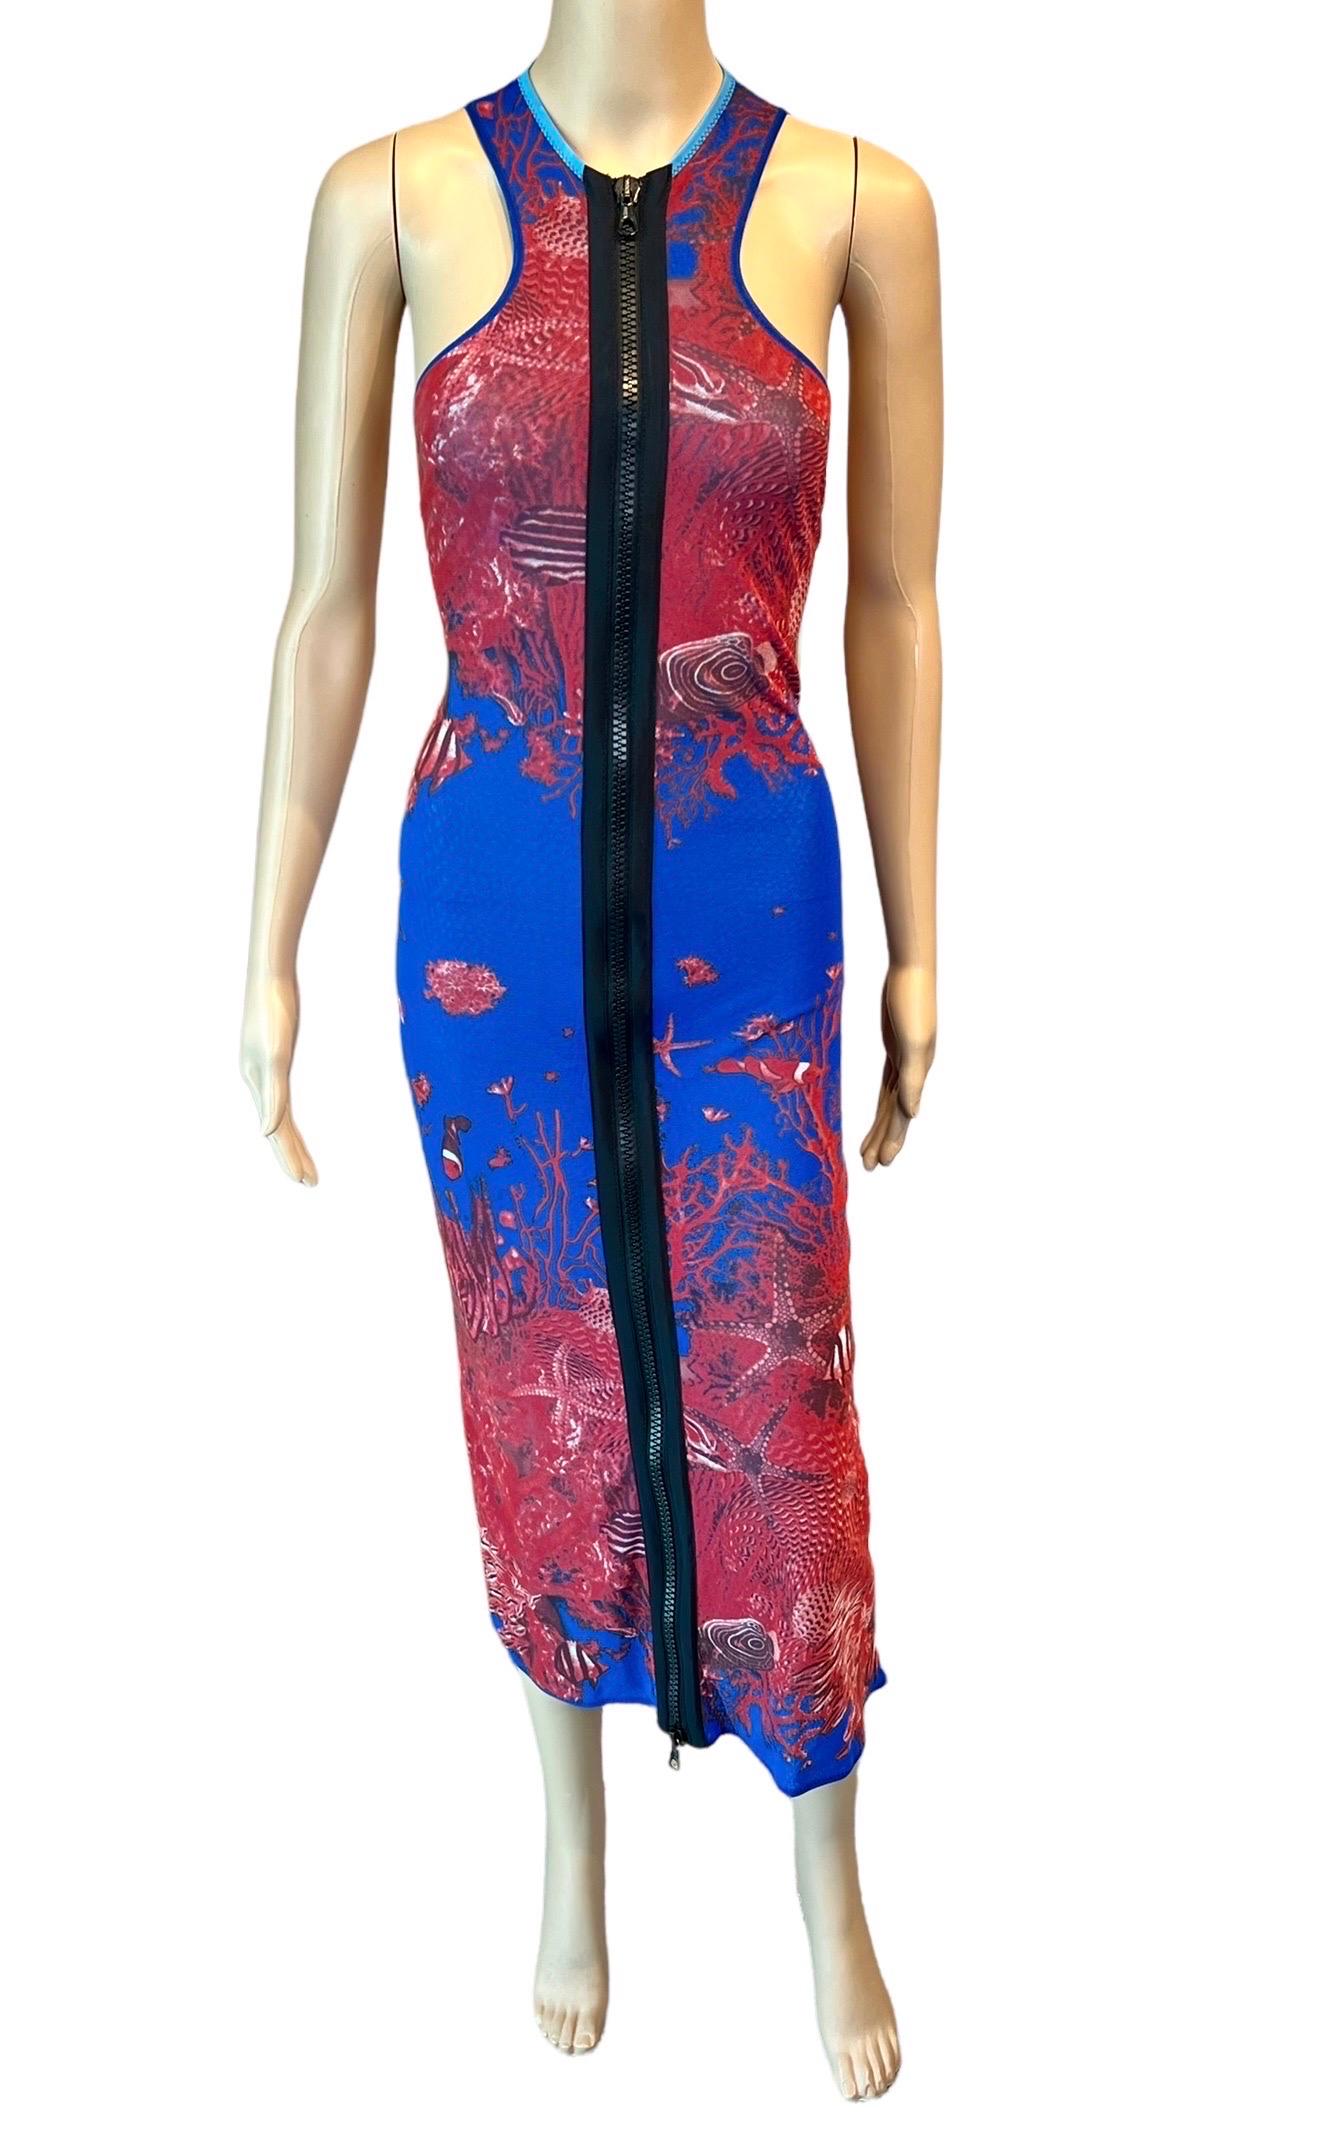 Jean Paul Gaultier Soleil S/S 1999 Sea Life Print Bodycon Zipper Mesh Maxi Dress For Sale 4